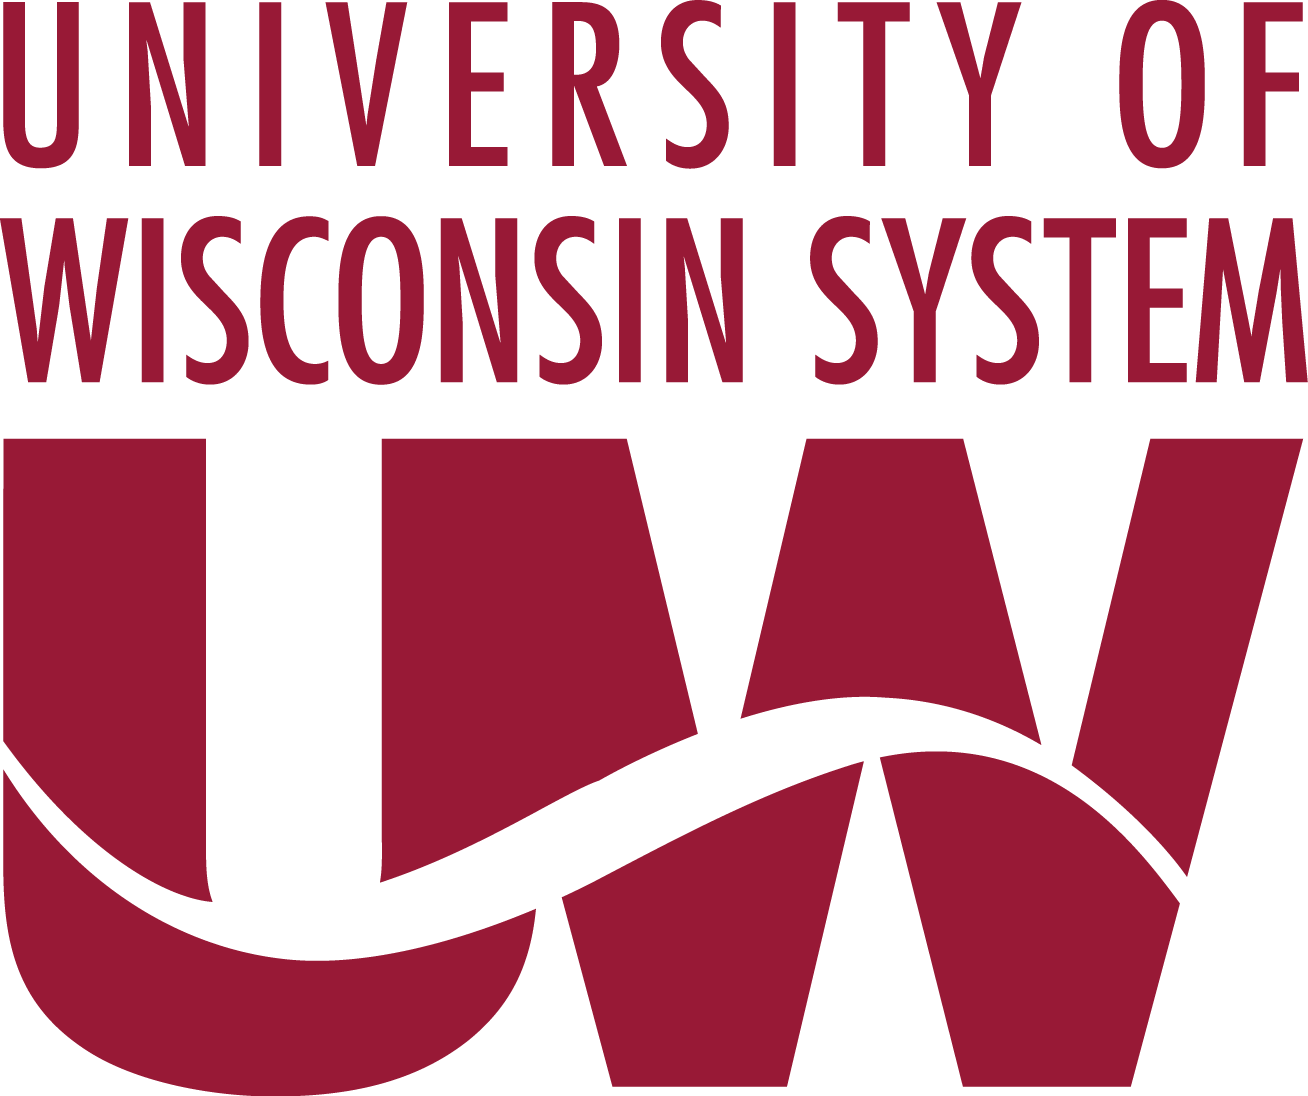 UW - University of Wisconsin System Logo